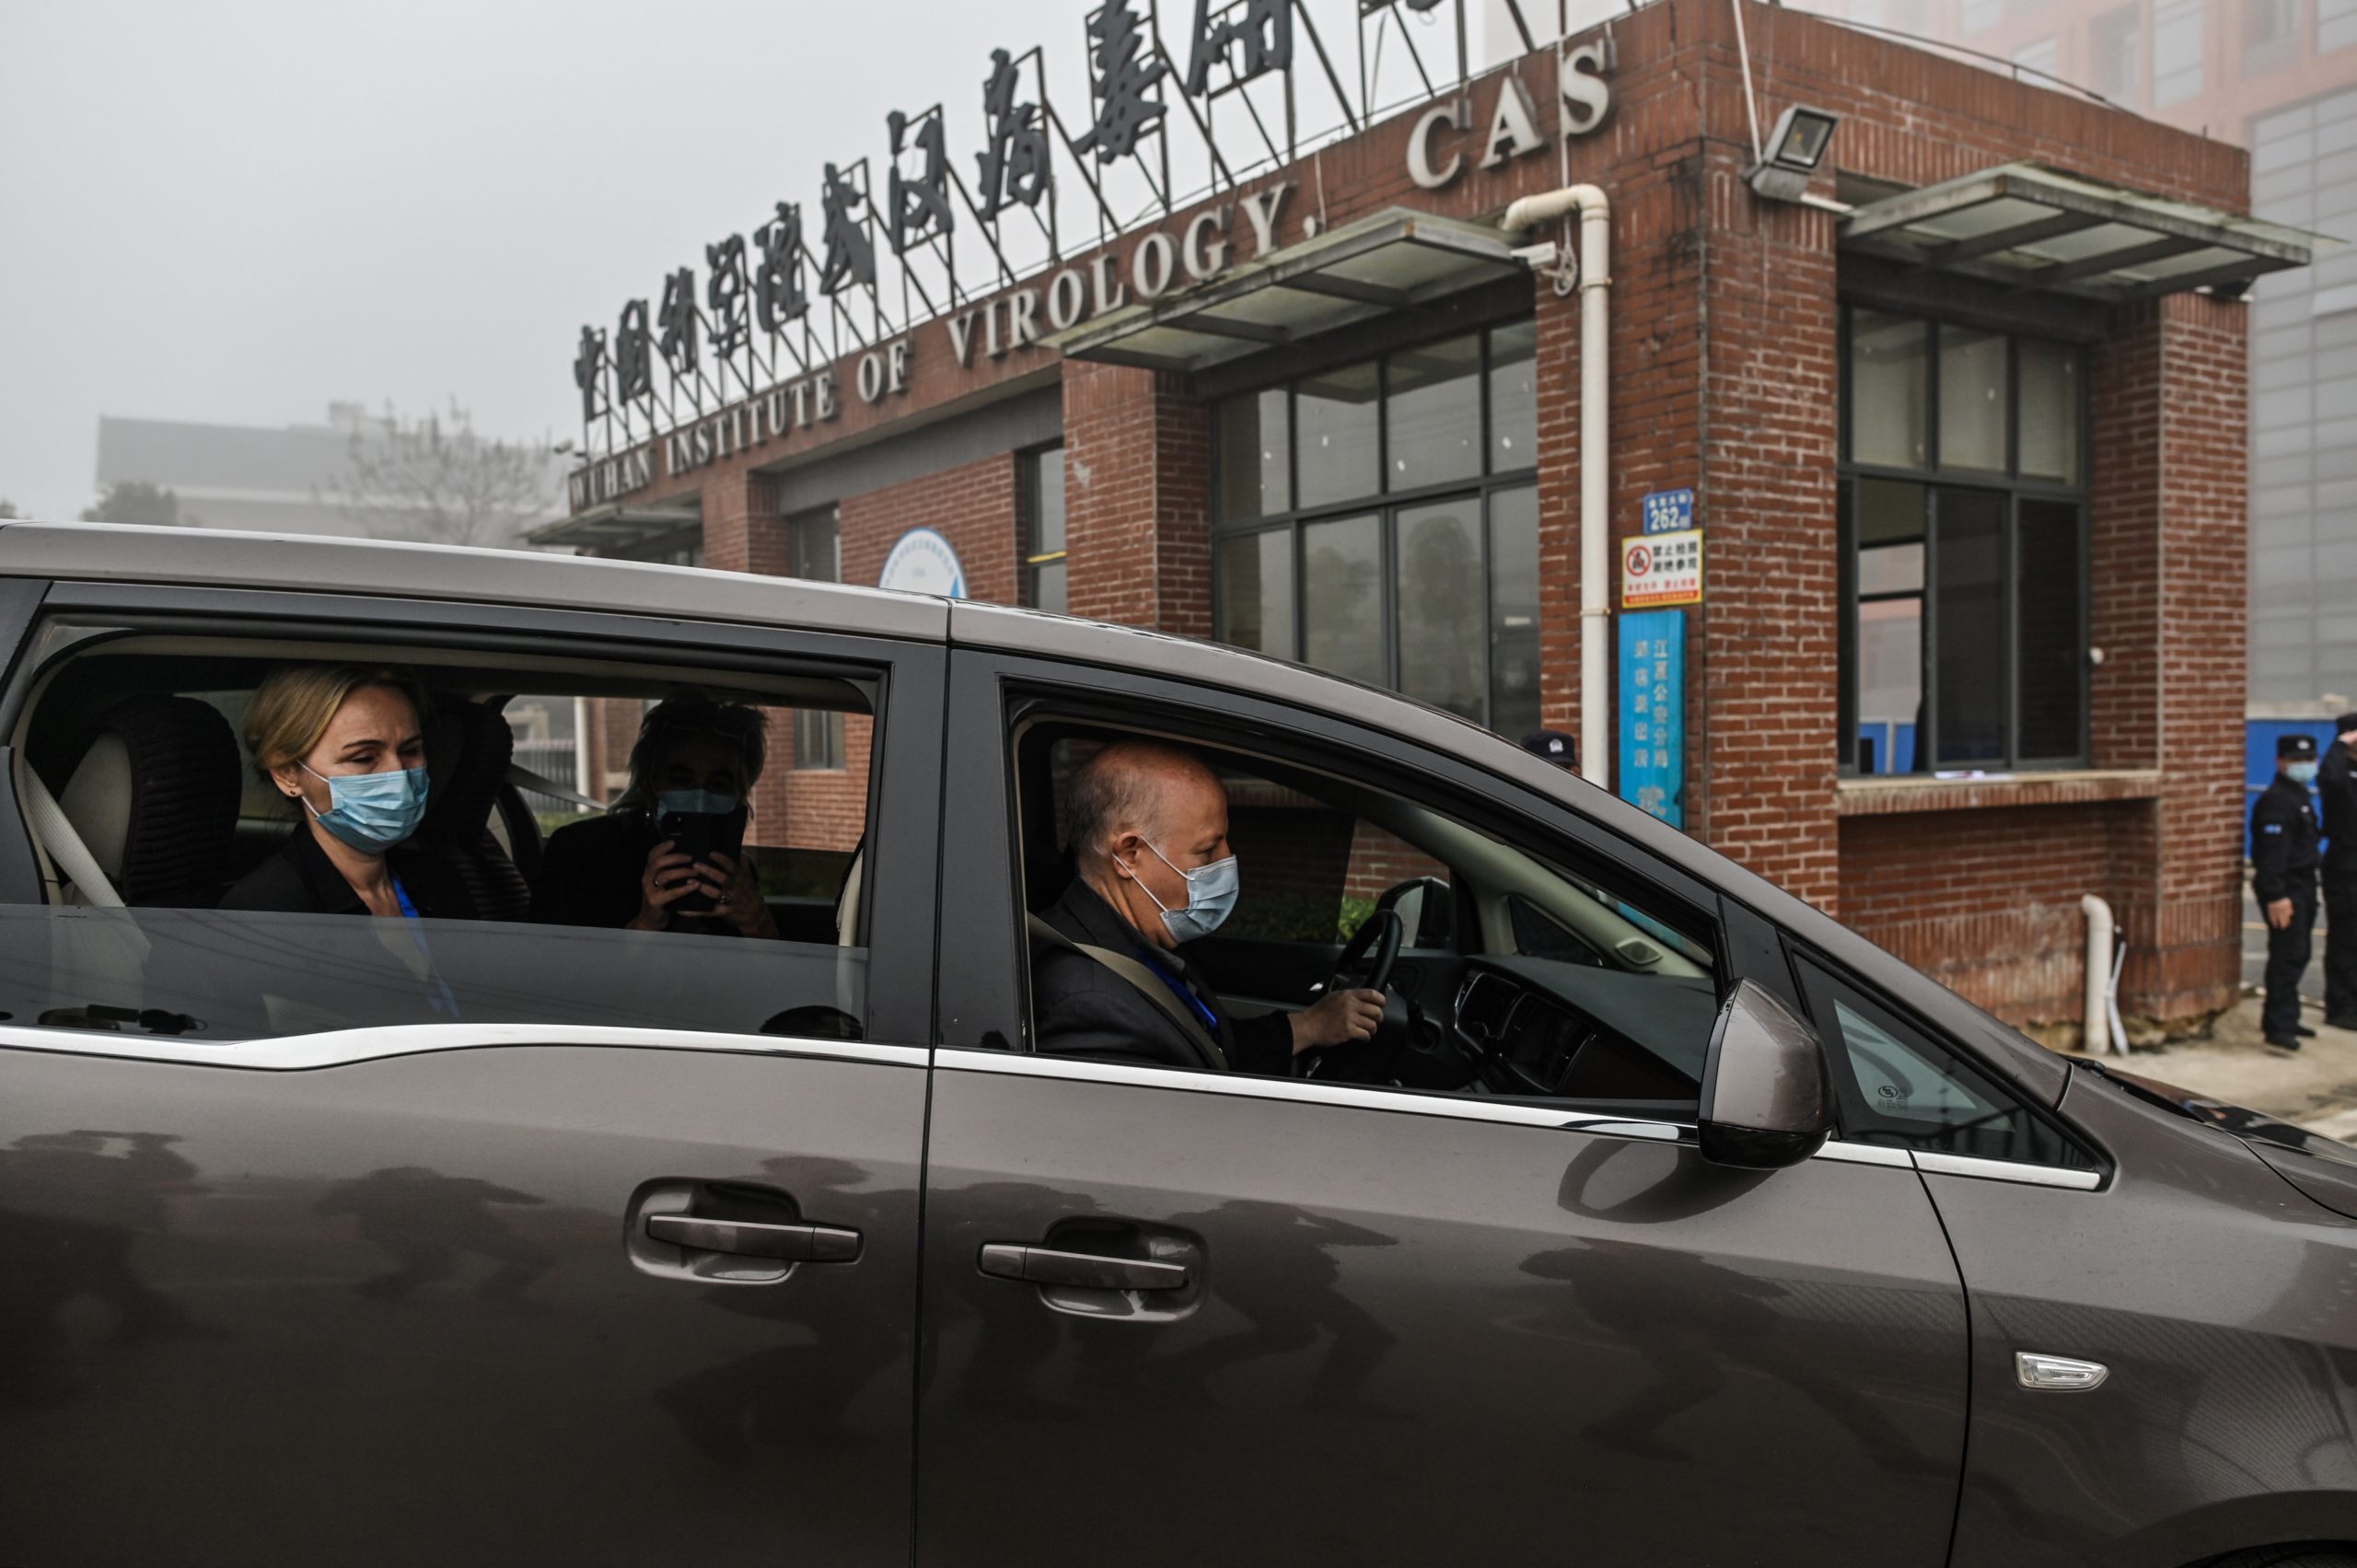 Members of the World Health Organization team investigating the origins of coronavirus arrive at the Wuhan Institute of Virology in Wuhan, China on Feb. 3. (Hector Retamal/AFP via Getty Images)